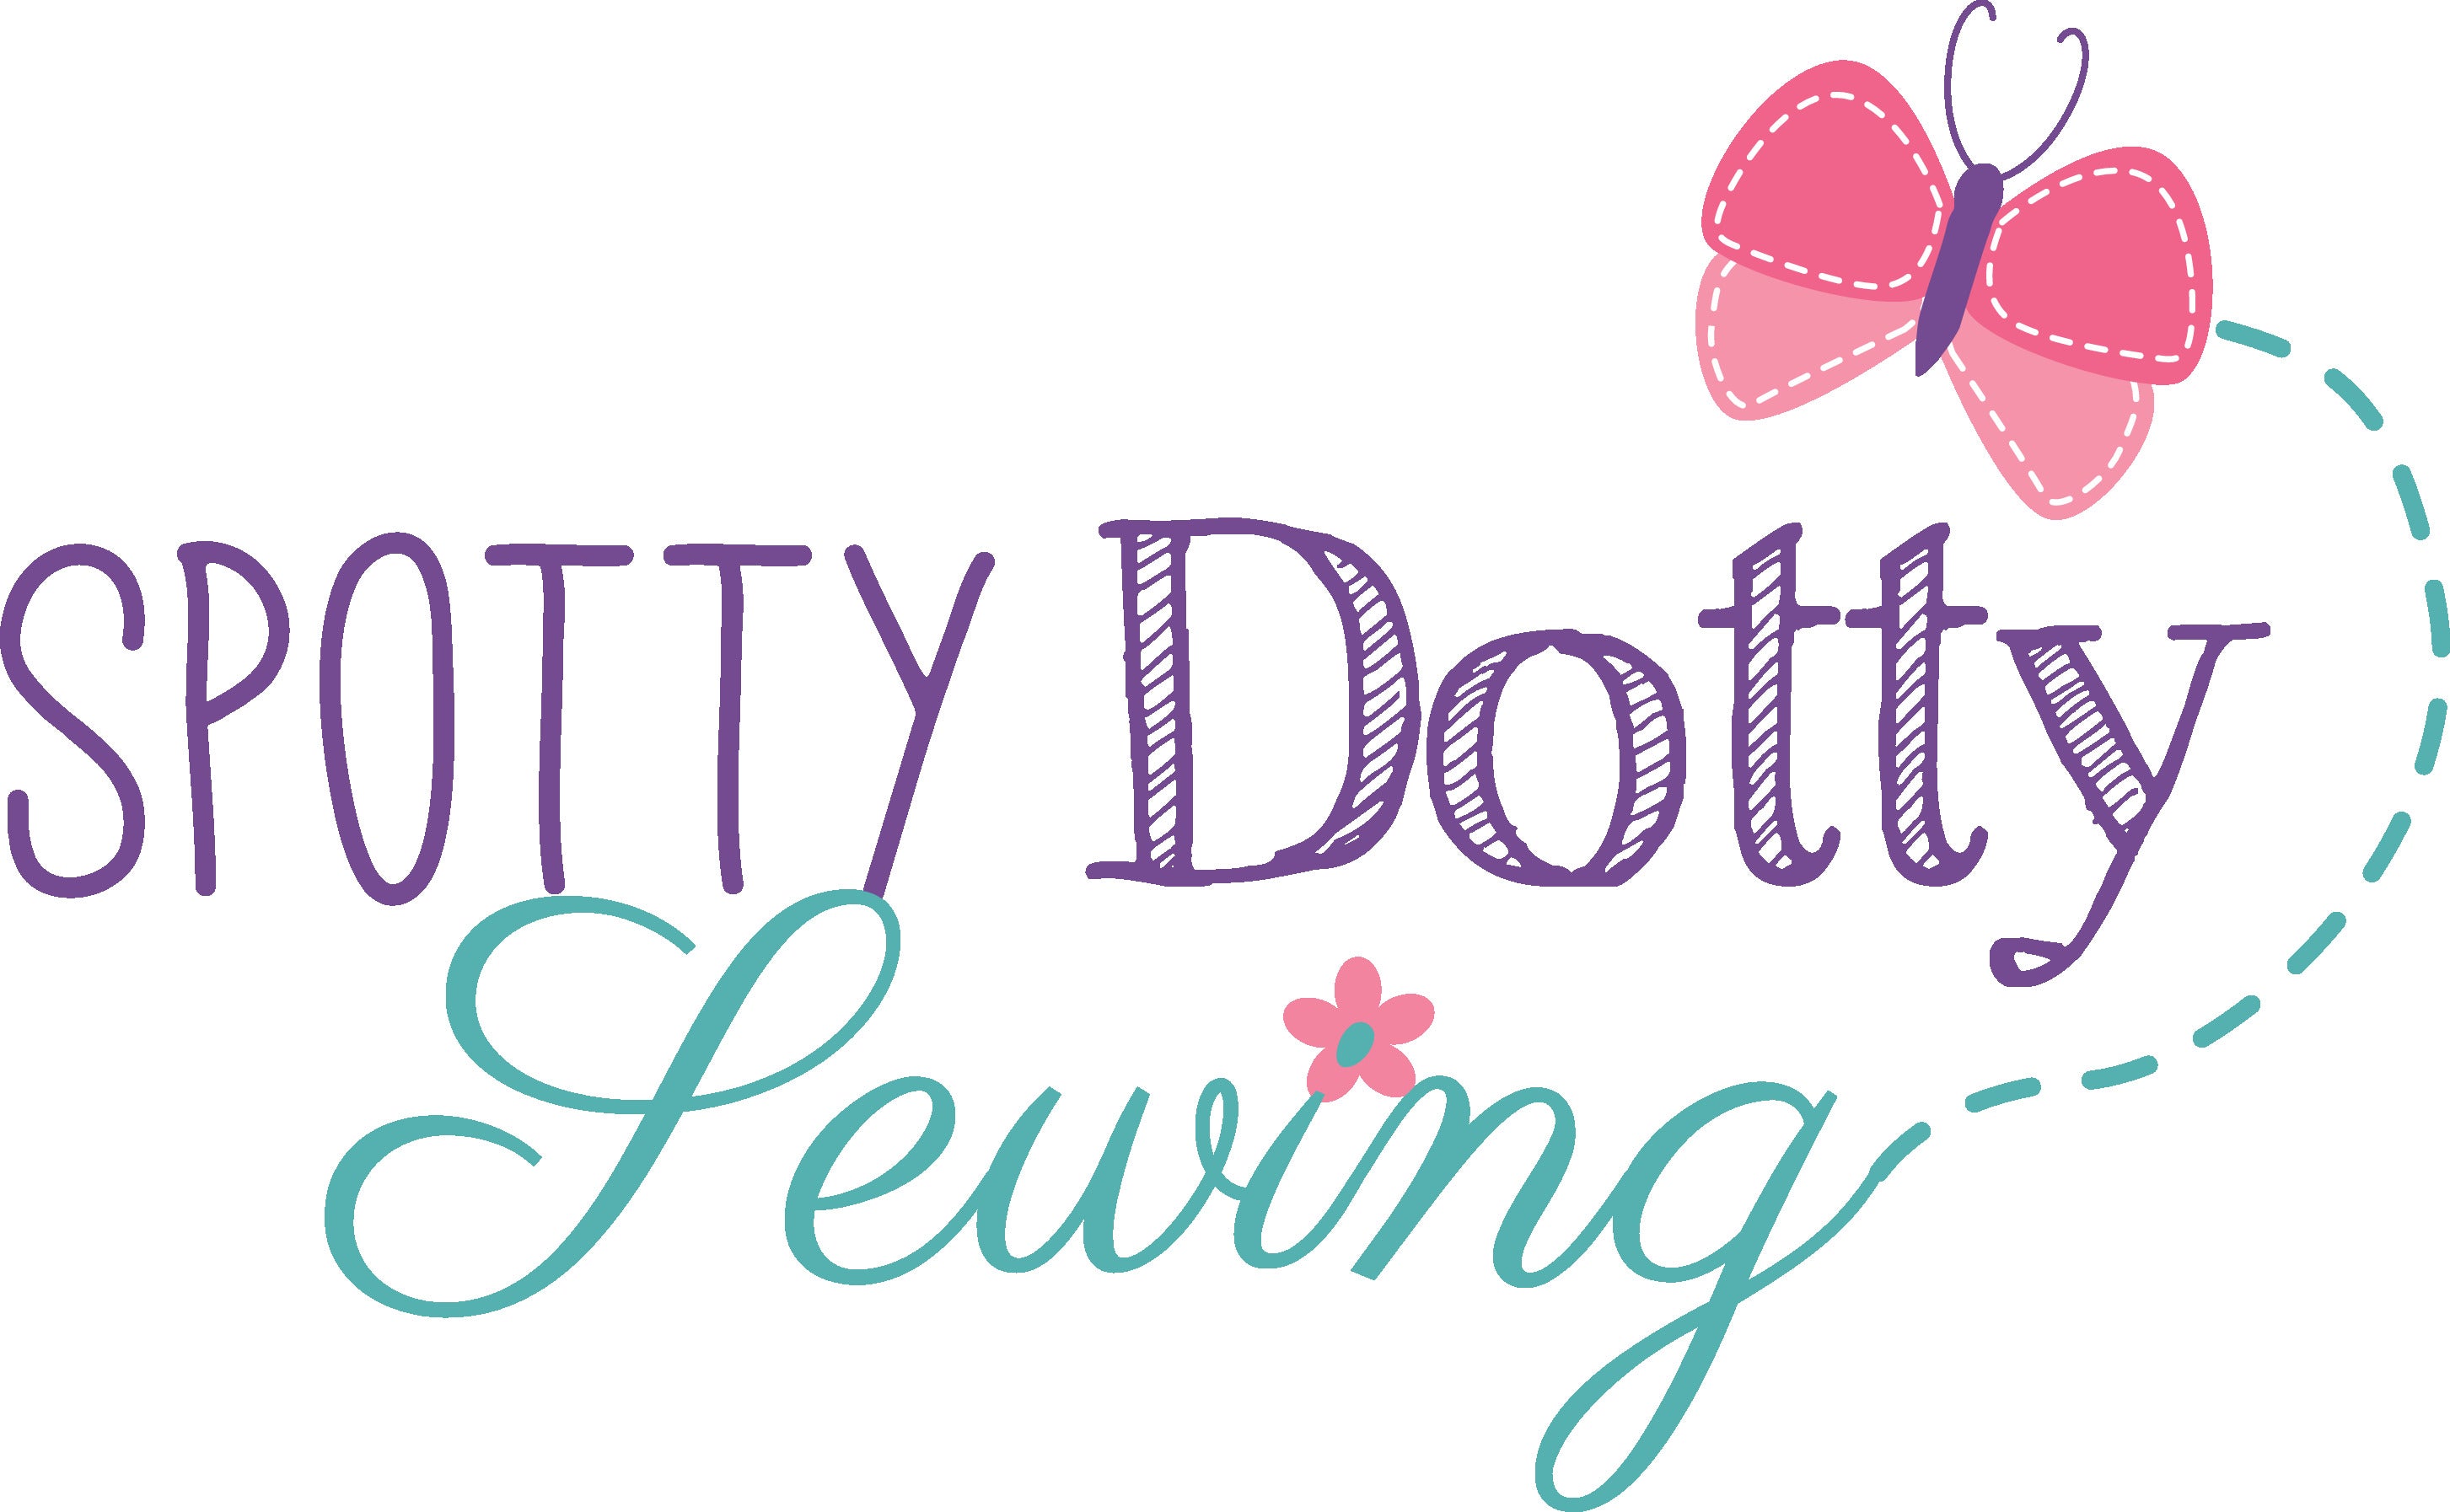 Spotty Dotty Sewing